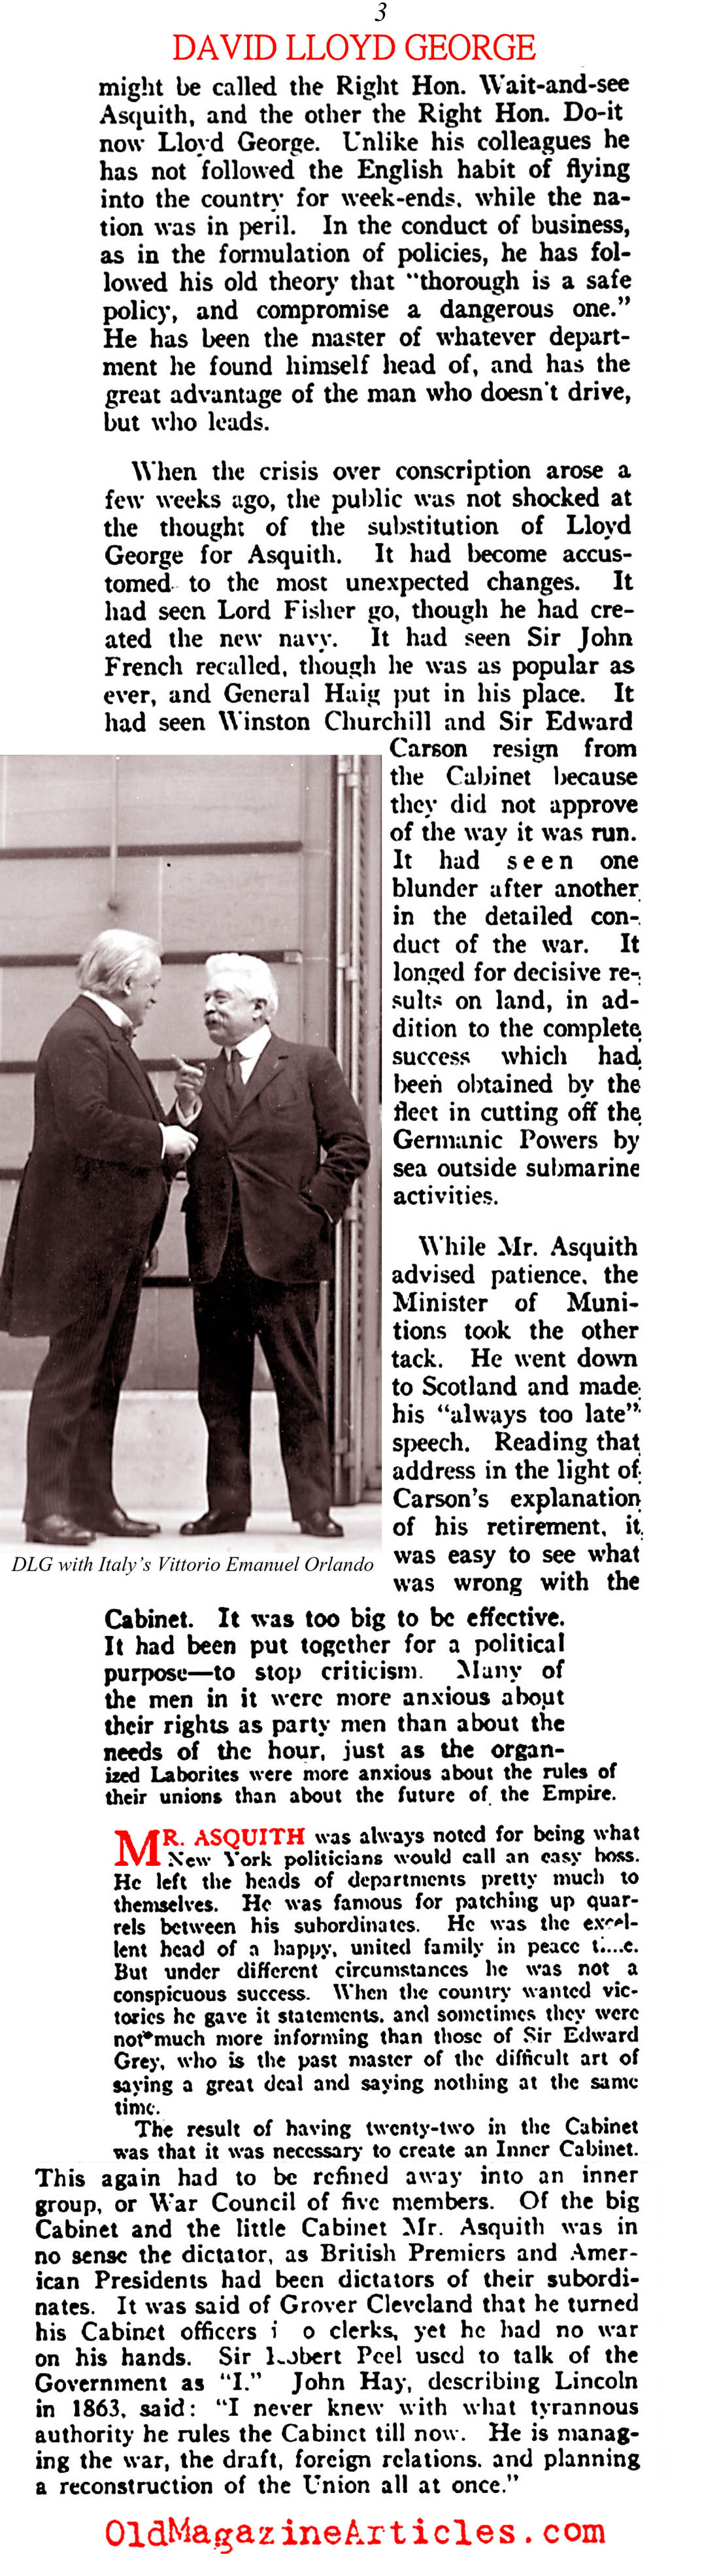 David Lloyd George (Vanity Fair, 1916)